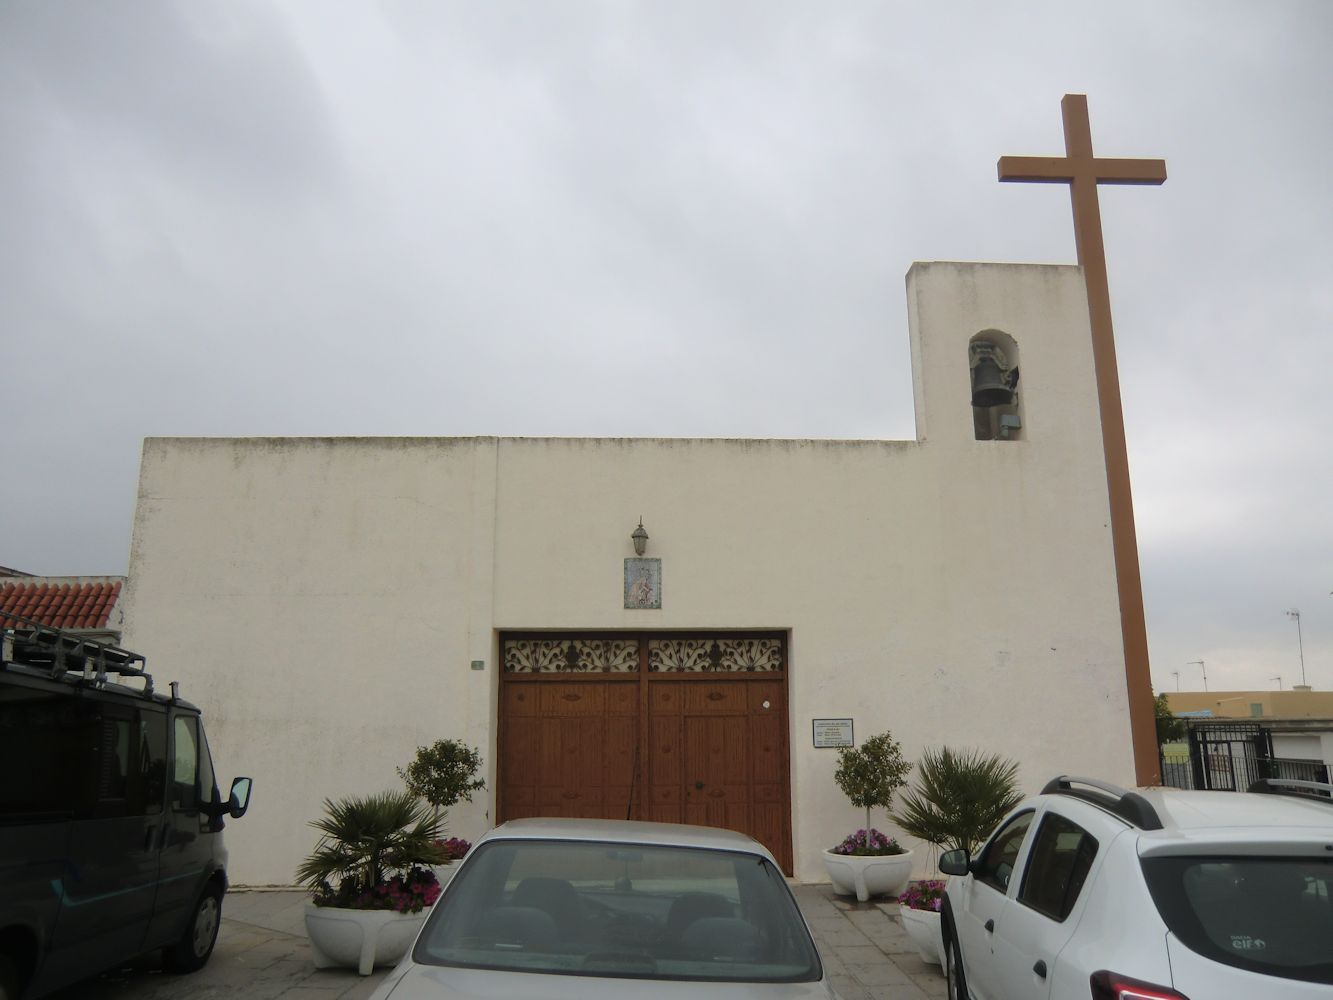 Die katholische Kirche in Palmar de Troya